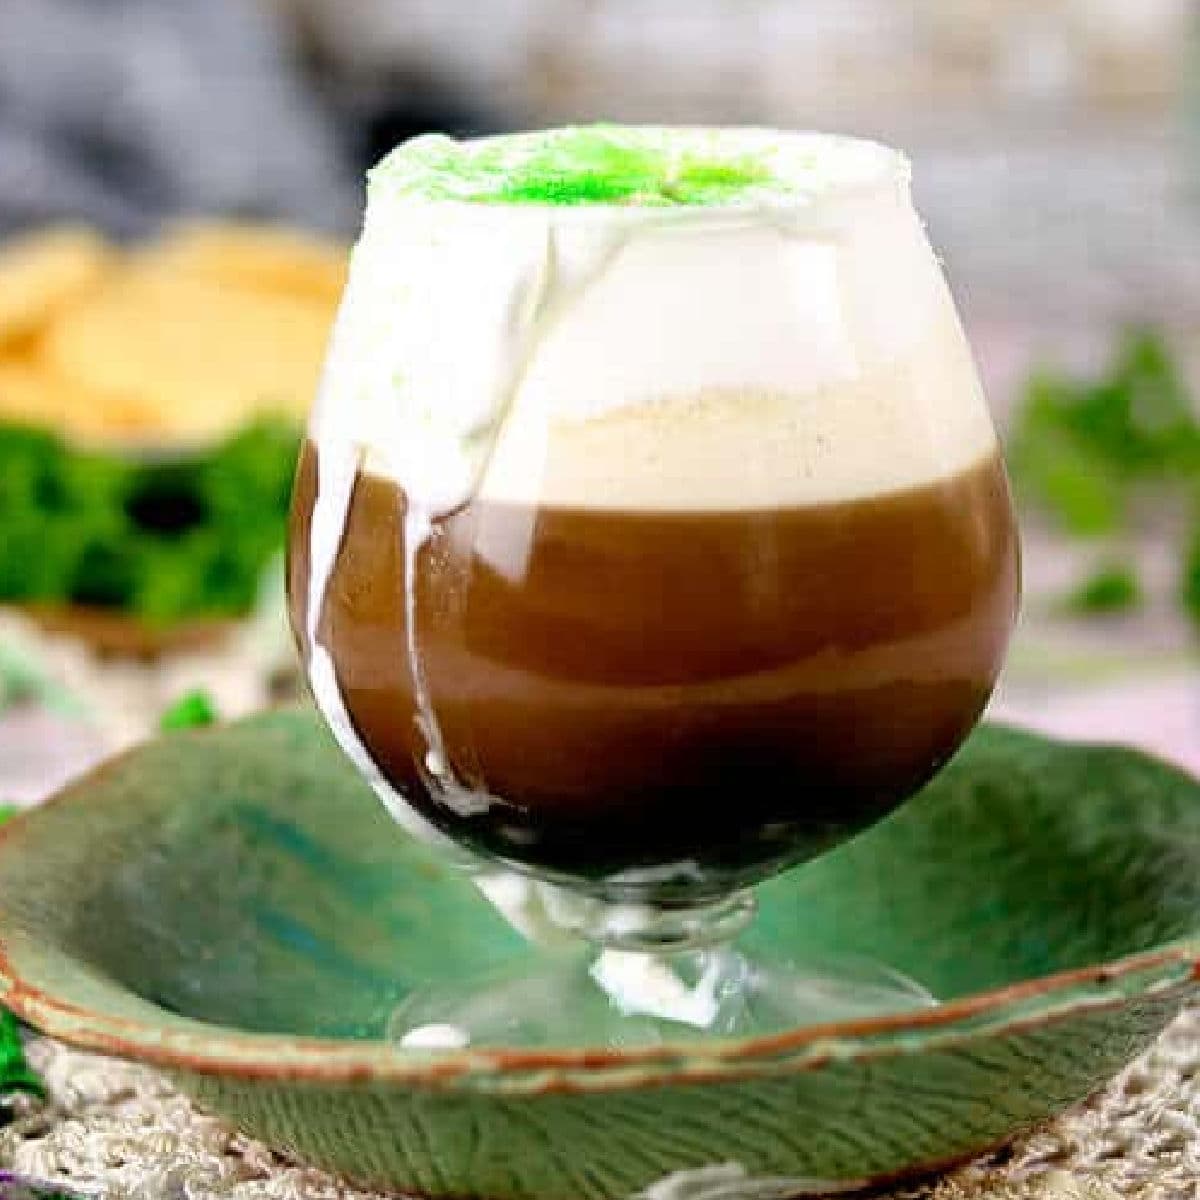 Baileys Original Irish Cream & Coffee Cocktail Recipe